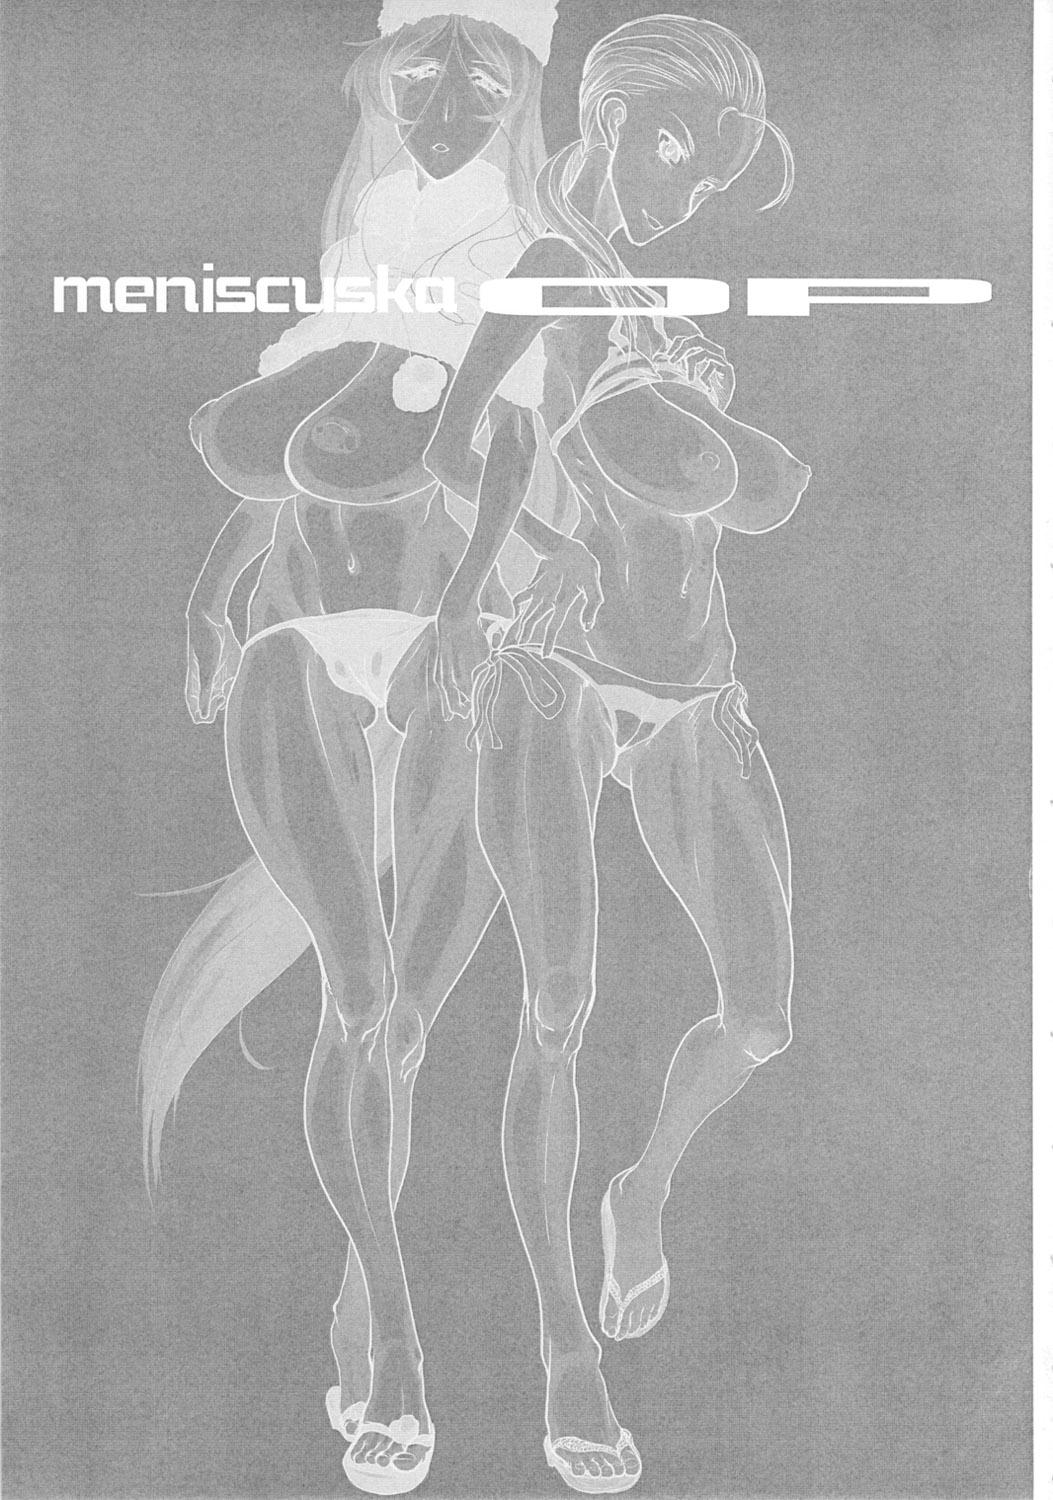 Flashing Meniscuska OP - Neon genesis evangelion Galaxy express 999 Foursome - Page 2